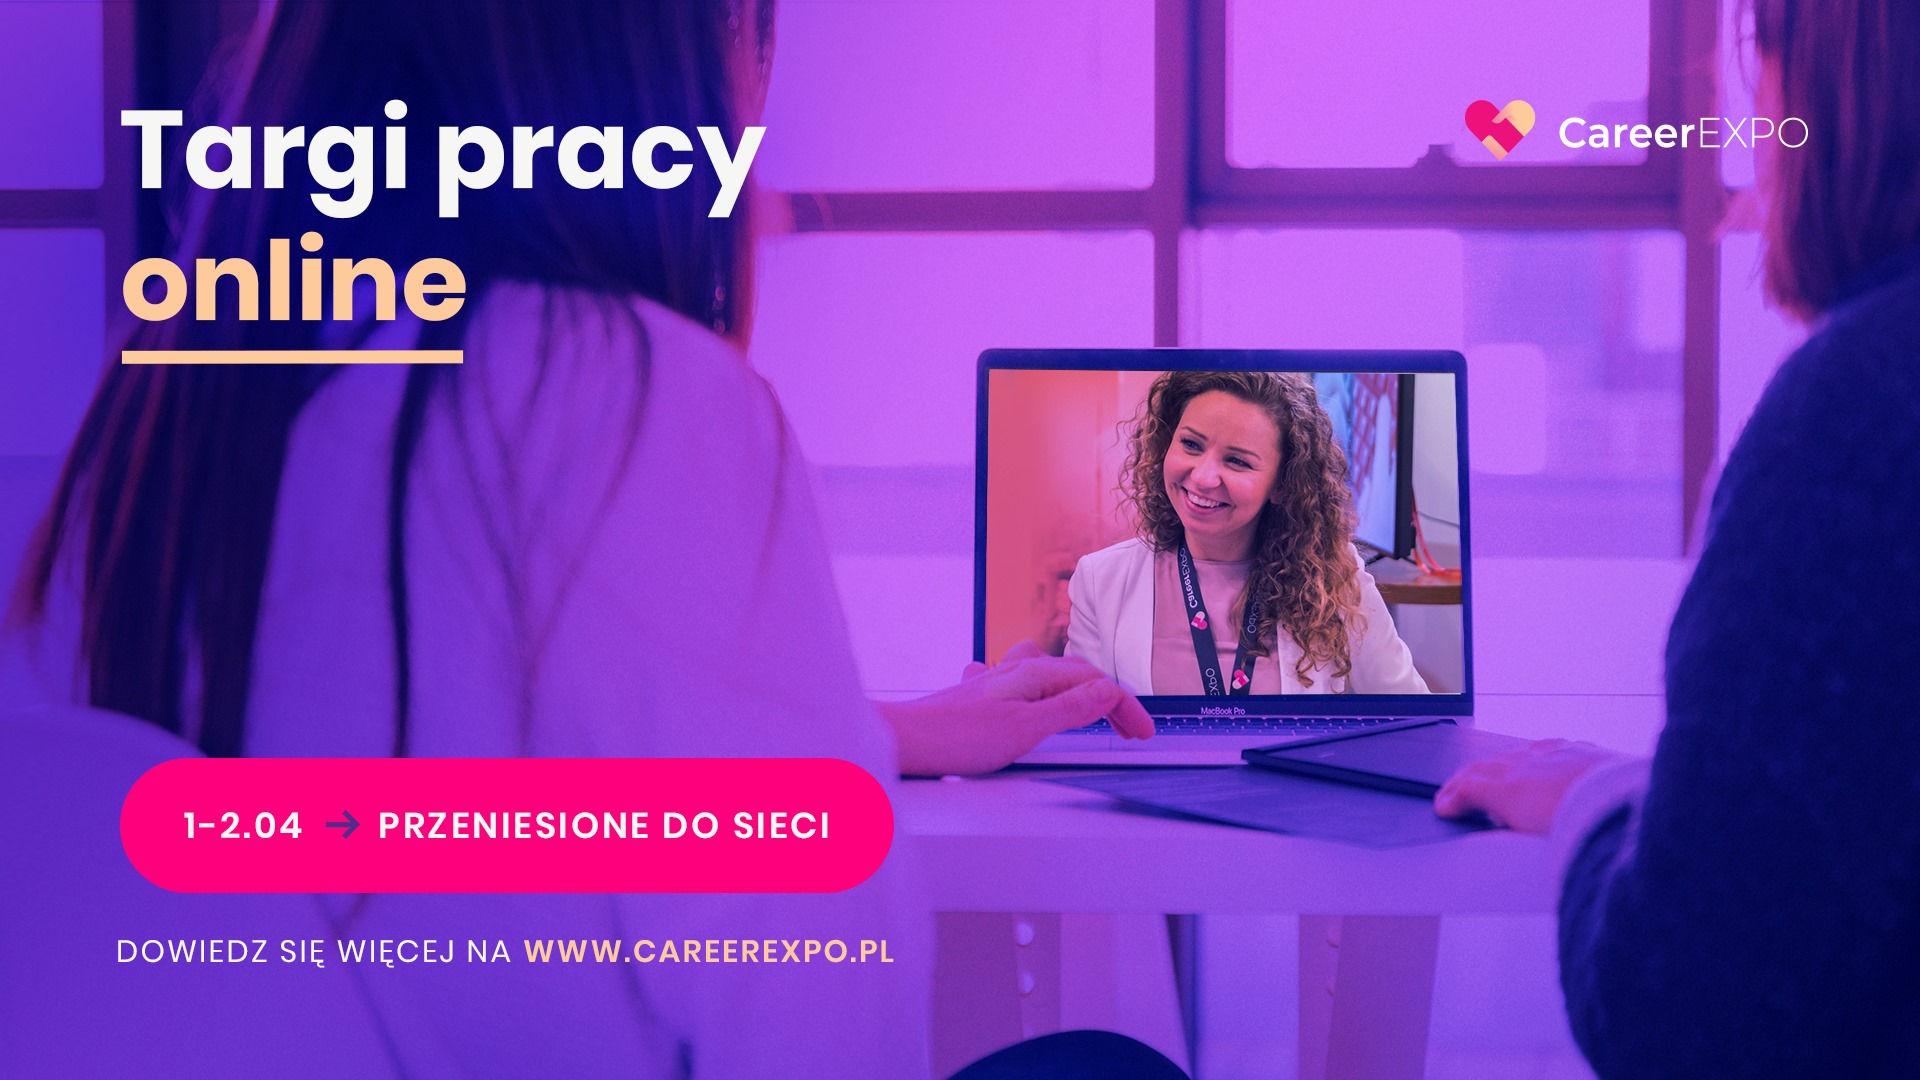 targi-pracy-career-expo-wroclaw-online-kwiecien-2020